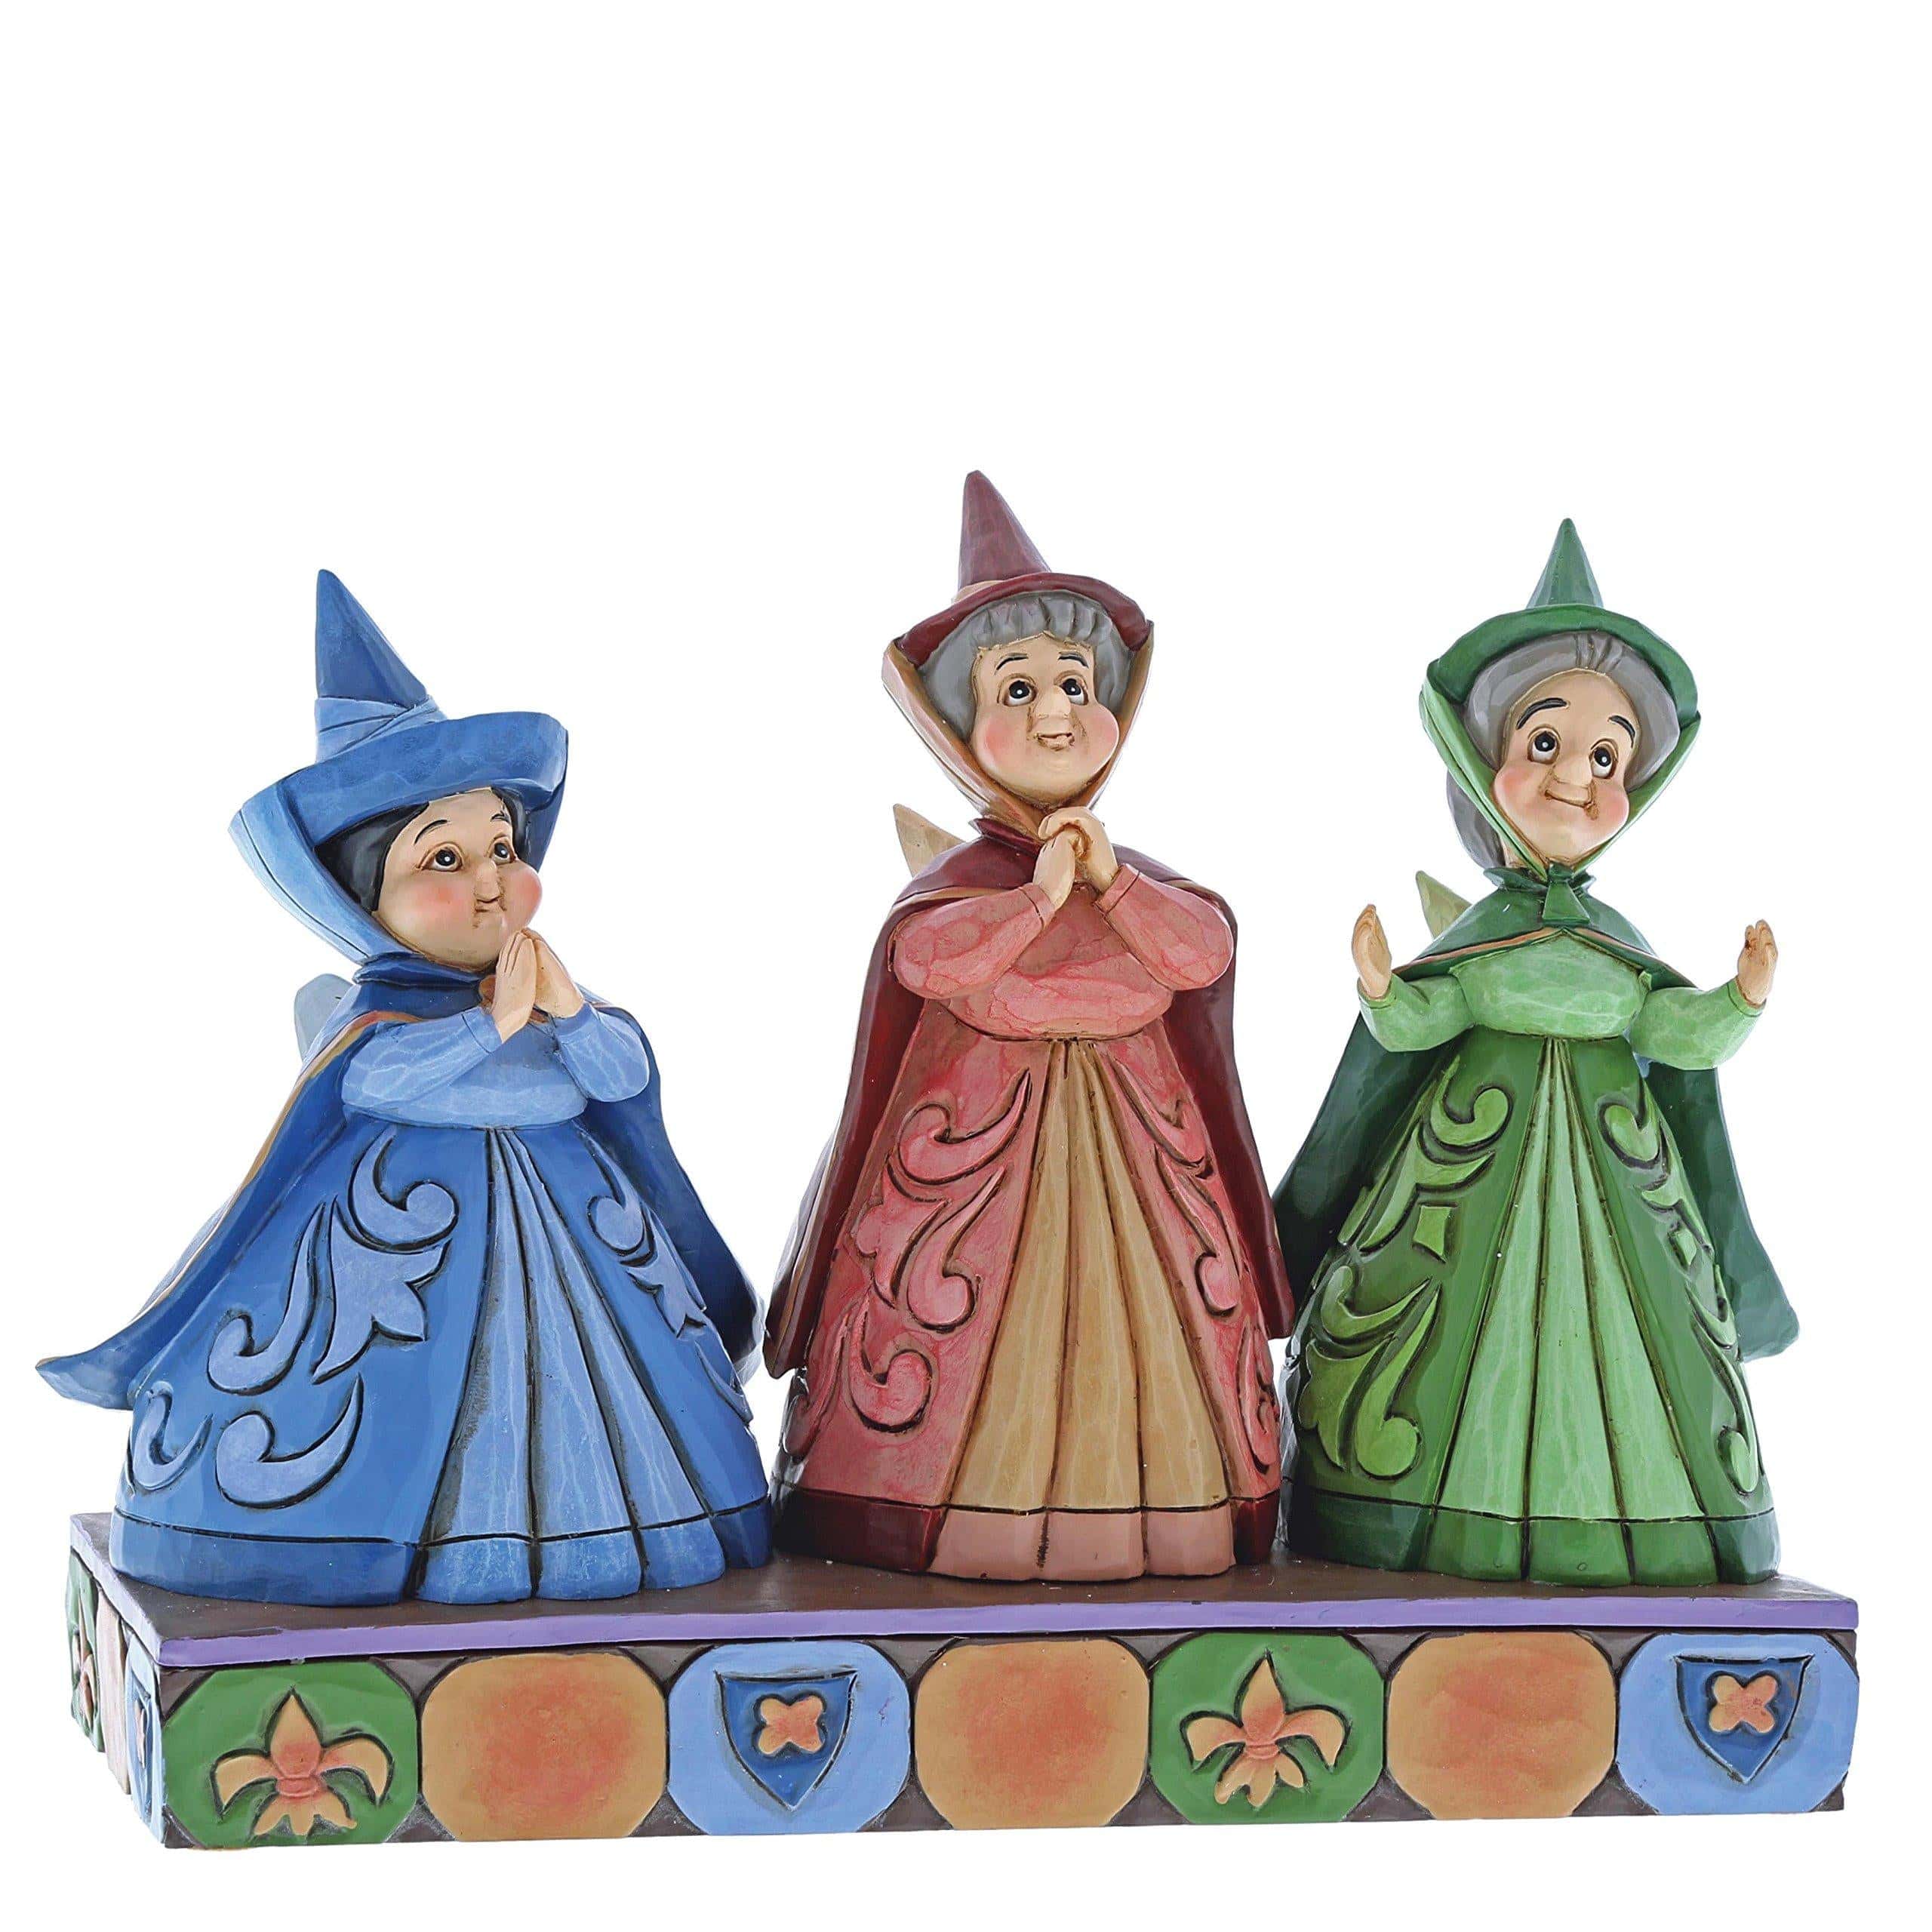 Enesco Disney Ornament Disney Traditions Figurine -  Royal Guests (Three Fairies Figurine)